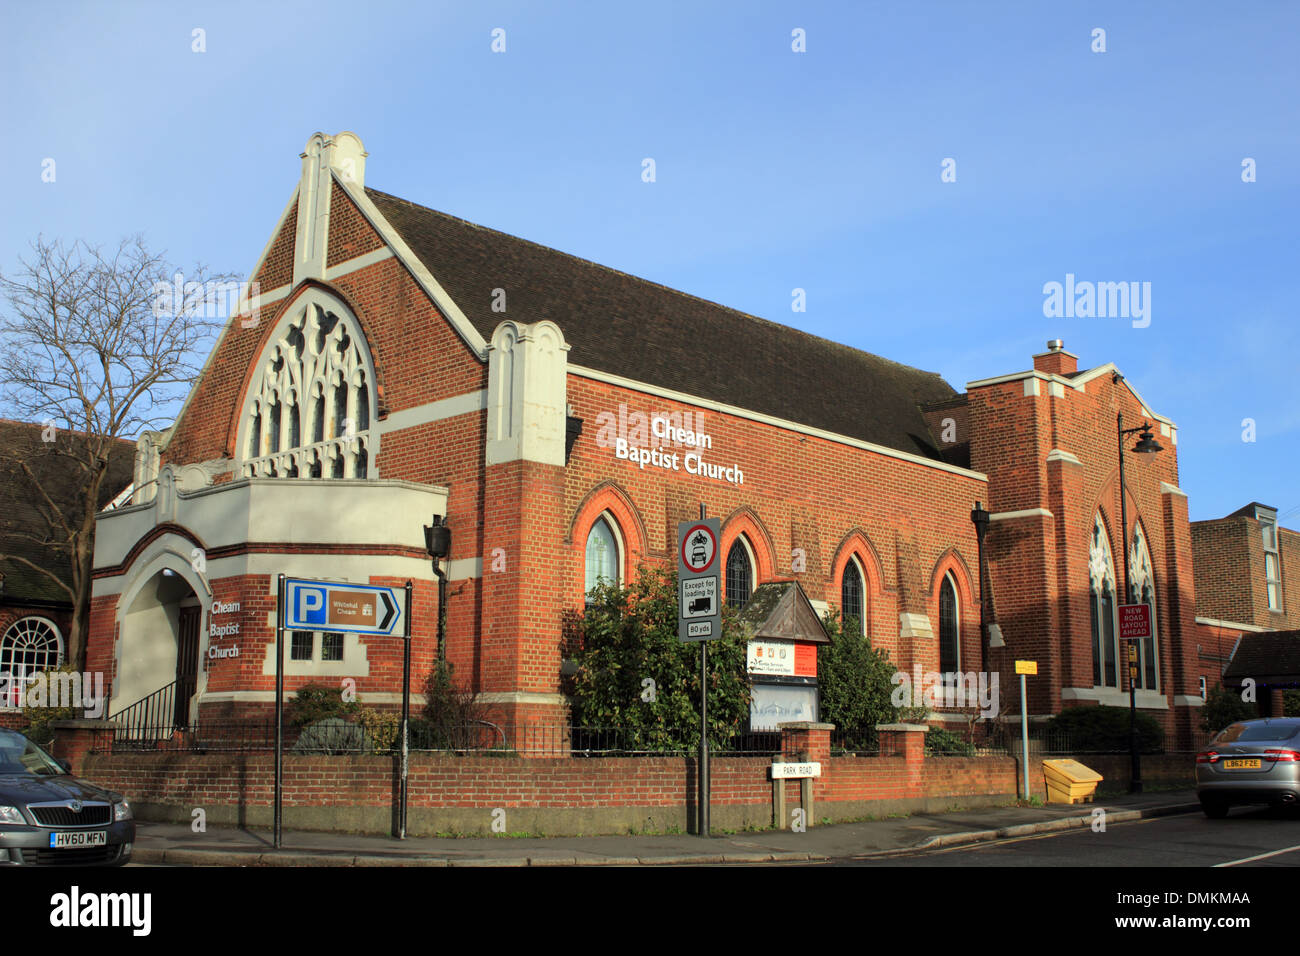 Cheam Baptist Church in London Borough of Sutton, England, UK. Stockfoto